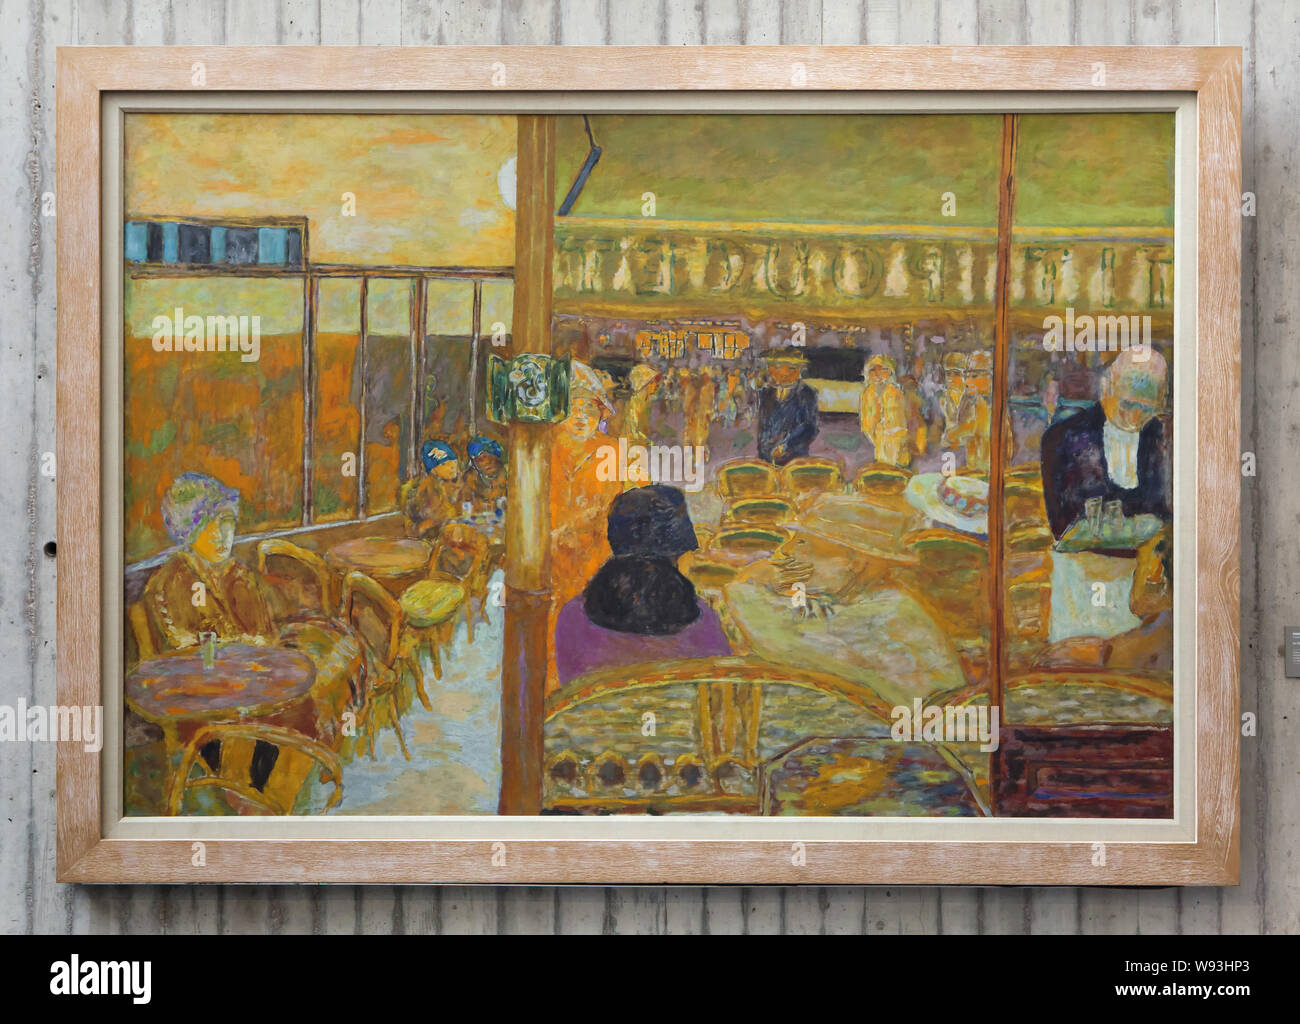 Gemälde "La Café du Petit-Poucet" durch die französische Maler Pierre Bonnard (1928) im Museum der bildenden Künste und der Archäologie (Musée des Beaux-Arts et d'Archéologie de Besançon) in Besançon, Frankreich. Stockfoto